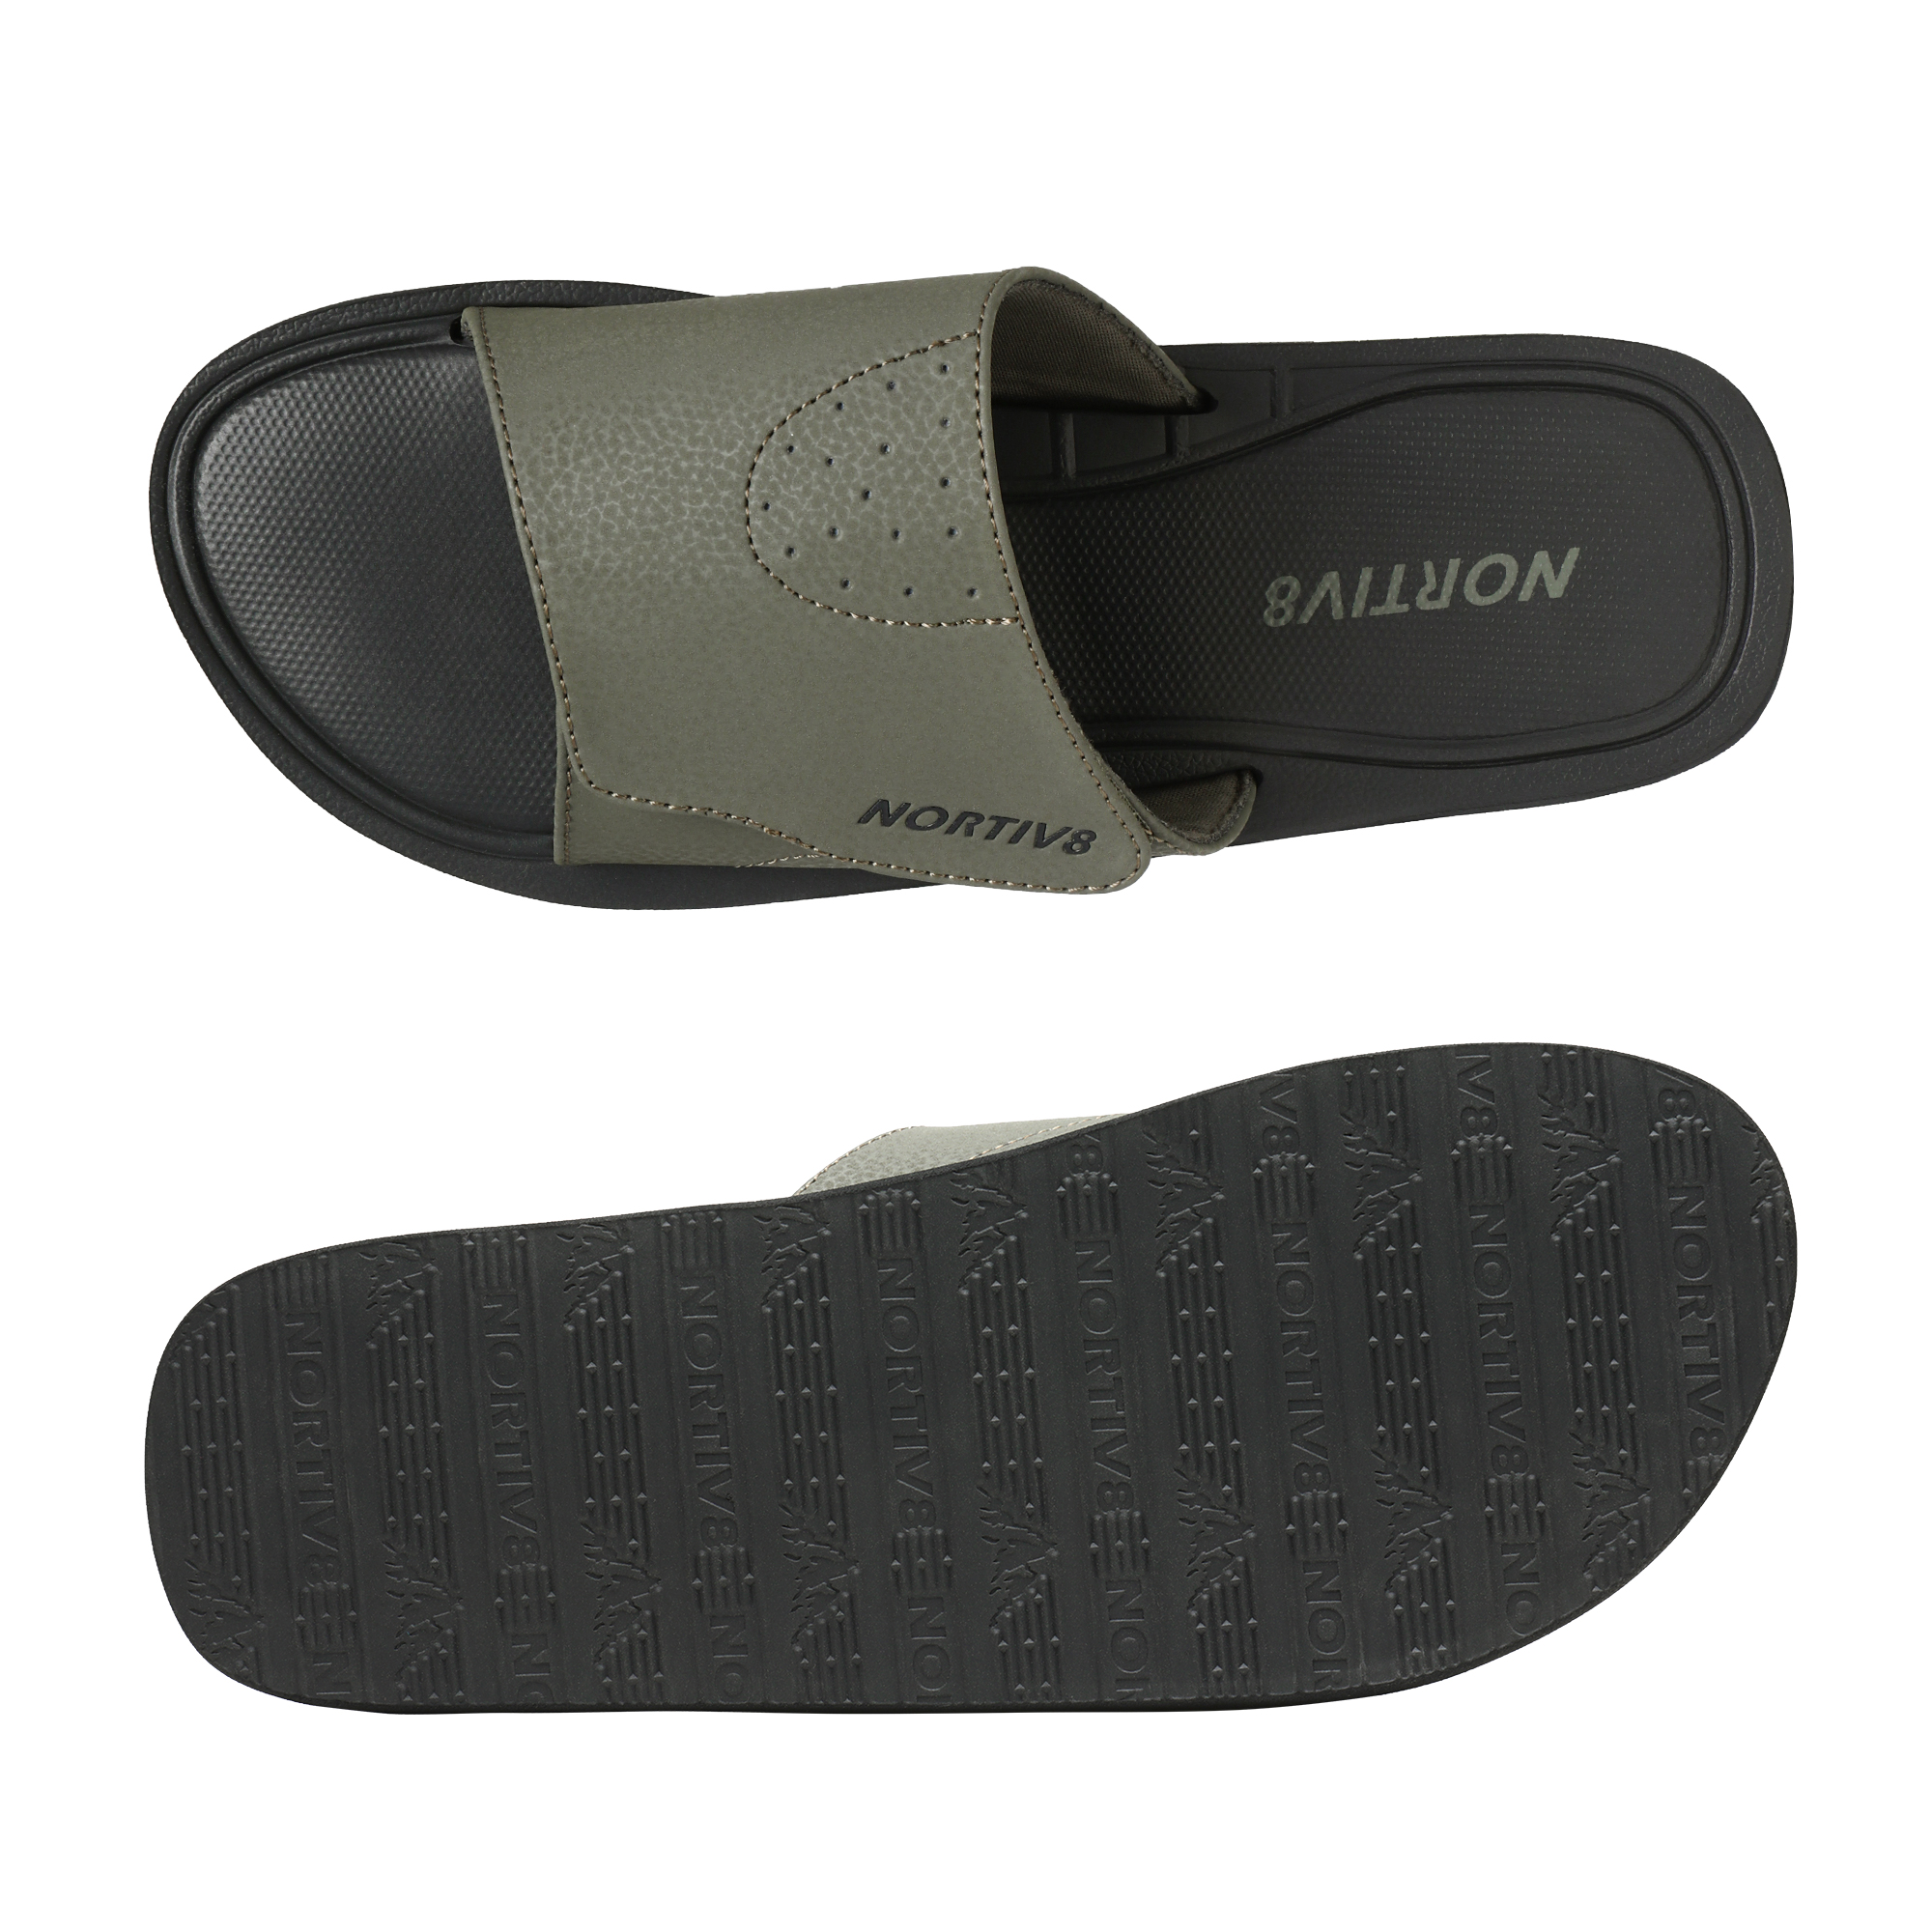 Nortiv8 Men's Memory Foam Adjustable Slide Sandals Comfort Lightweight Summer Beach Sandals Shoes FUSION OLIVE/GREEN Size 13 - image 3 of 5